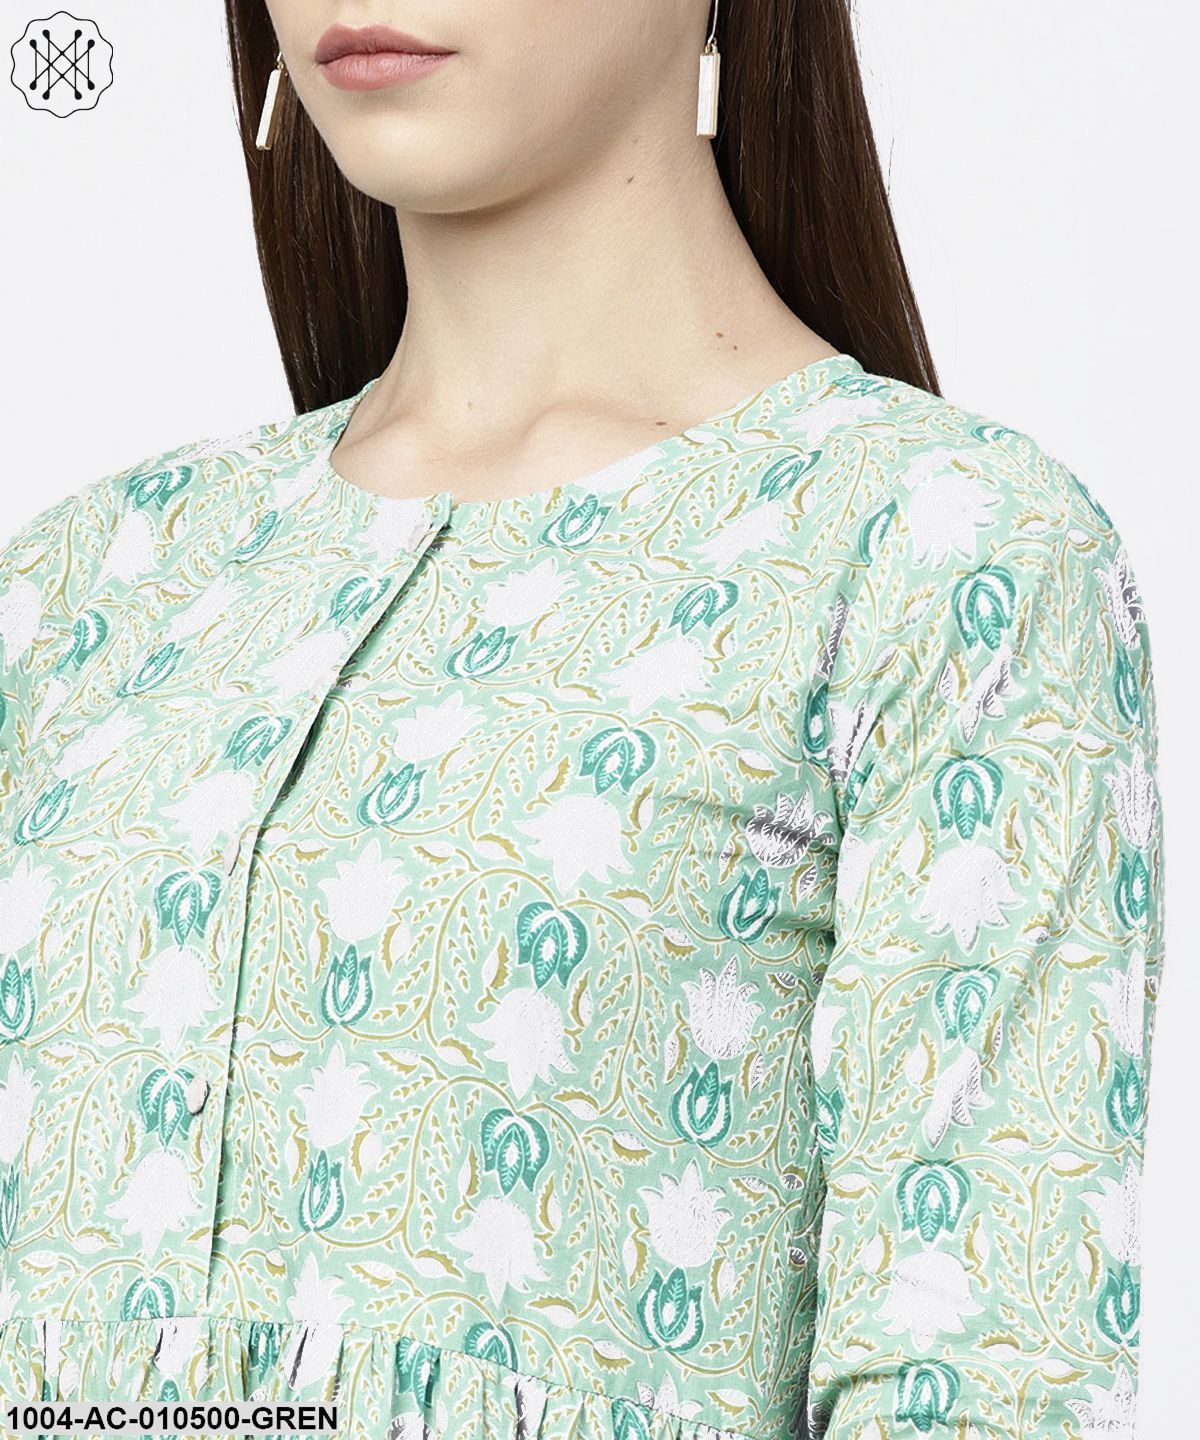 Green Printed Half Sleeve A-Line Maxi Dress